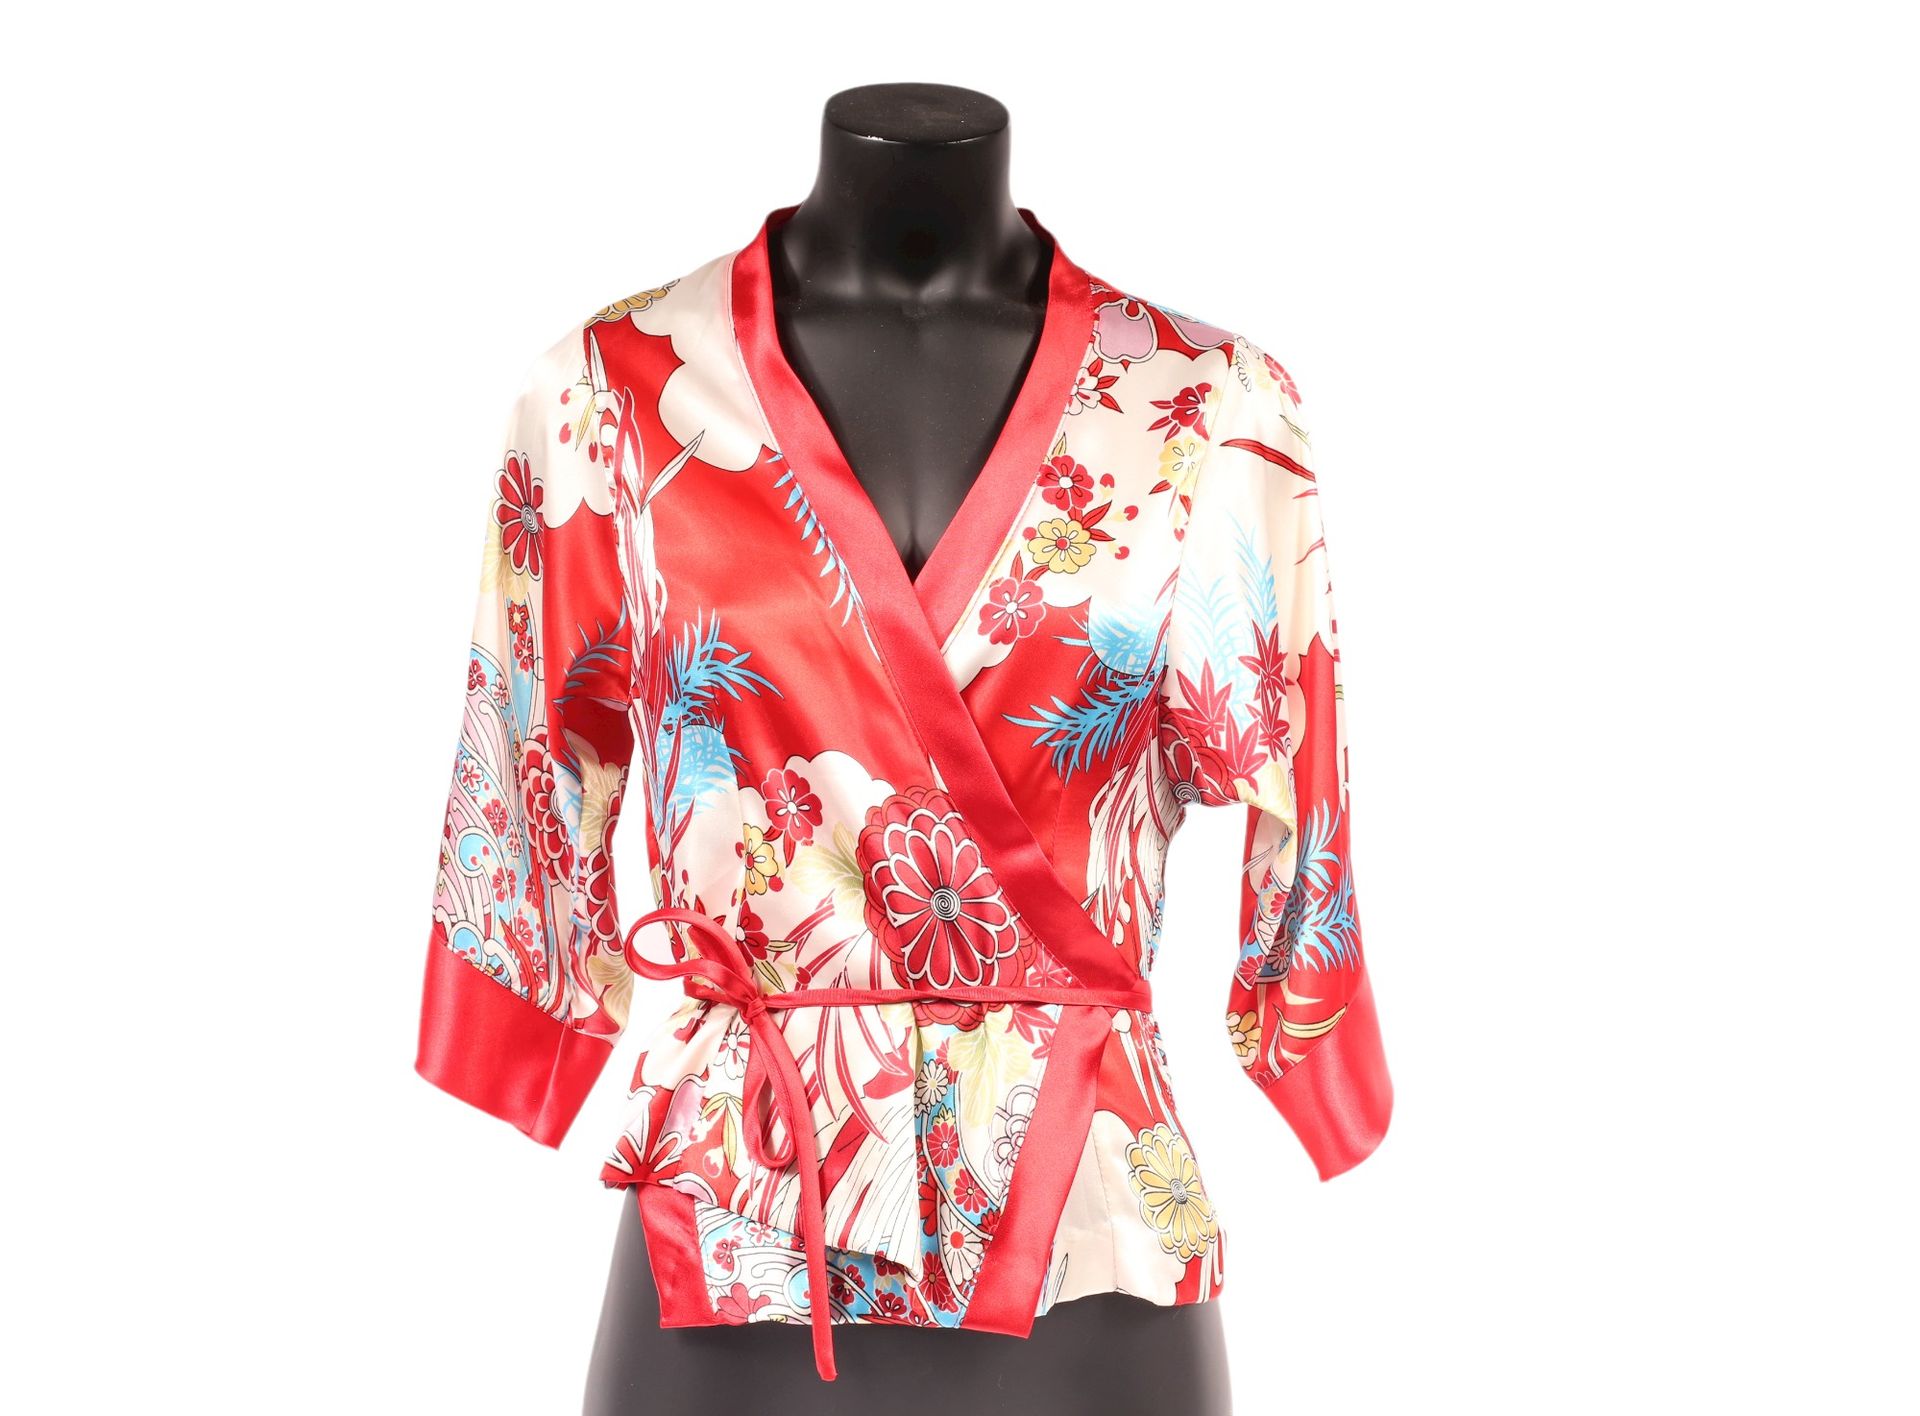 Null * ANONYM

Sechs Kimonojacken aus Polyester